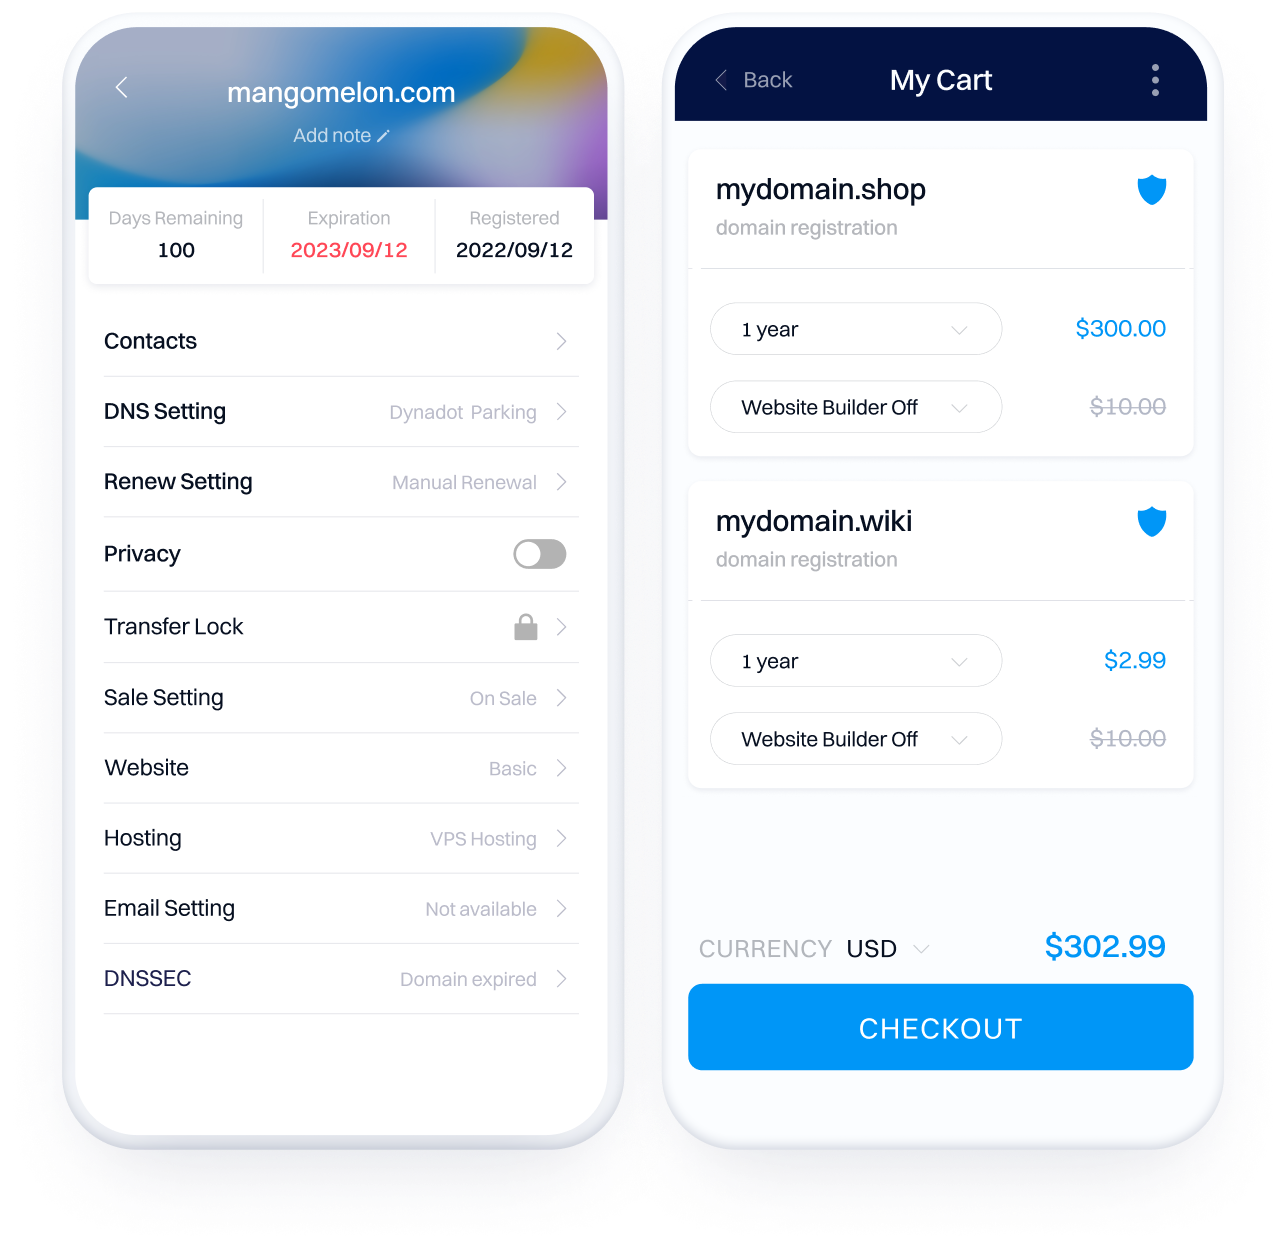 dynadot mobile app control panel domain management options and app cart checkout